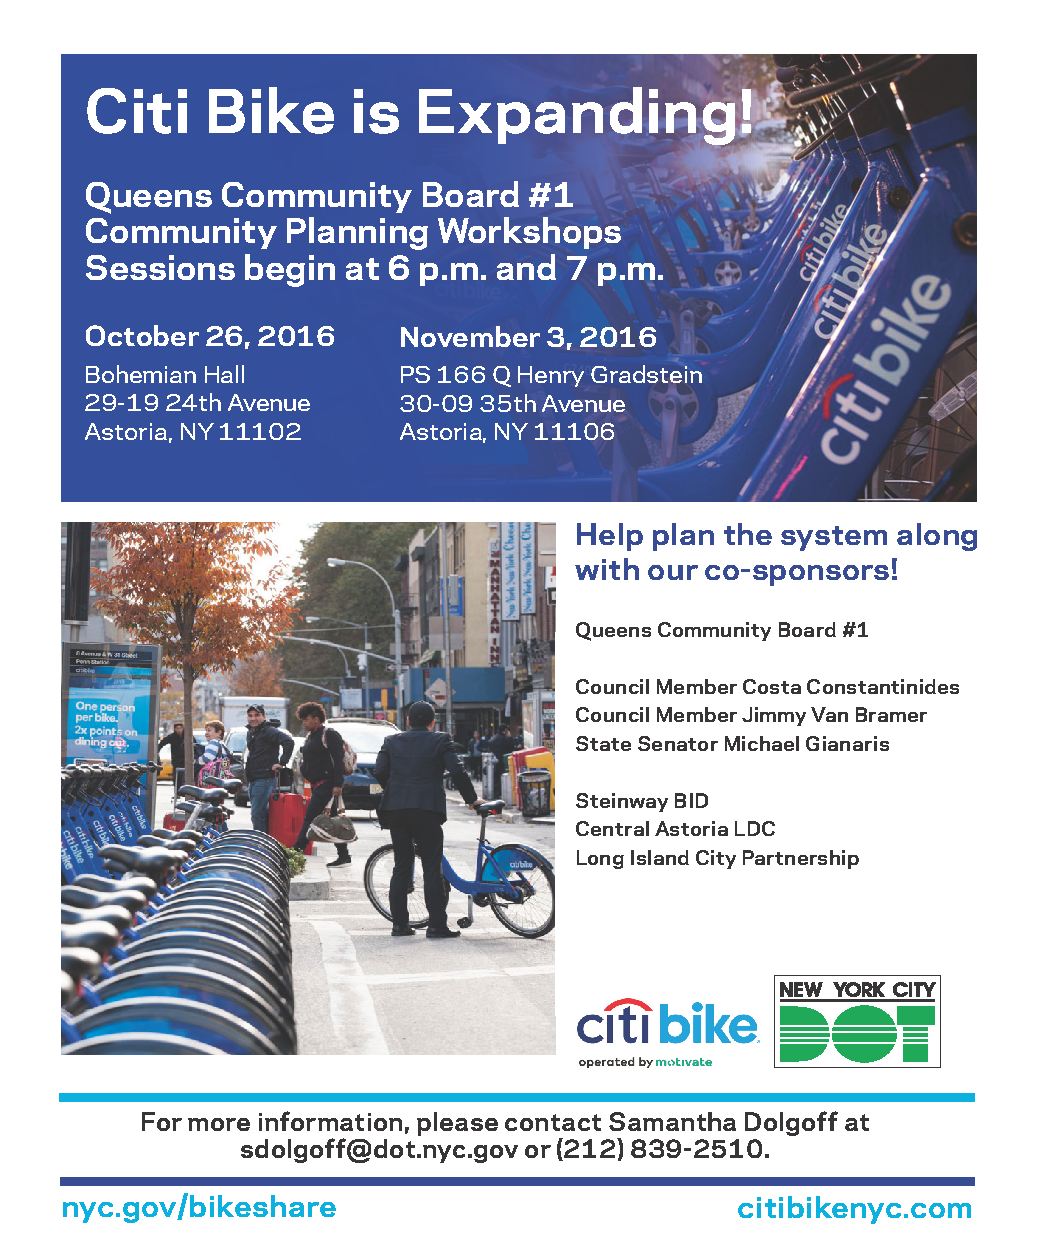 citi-bike-expanding-community-planning-workshops